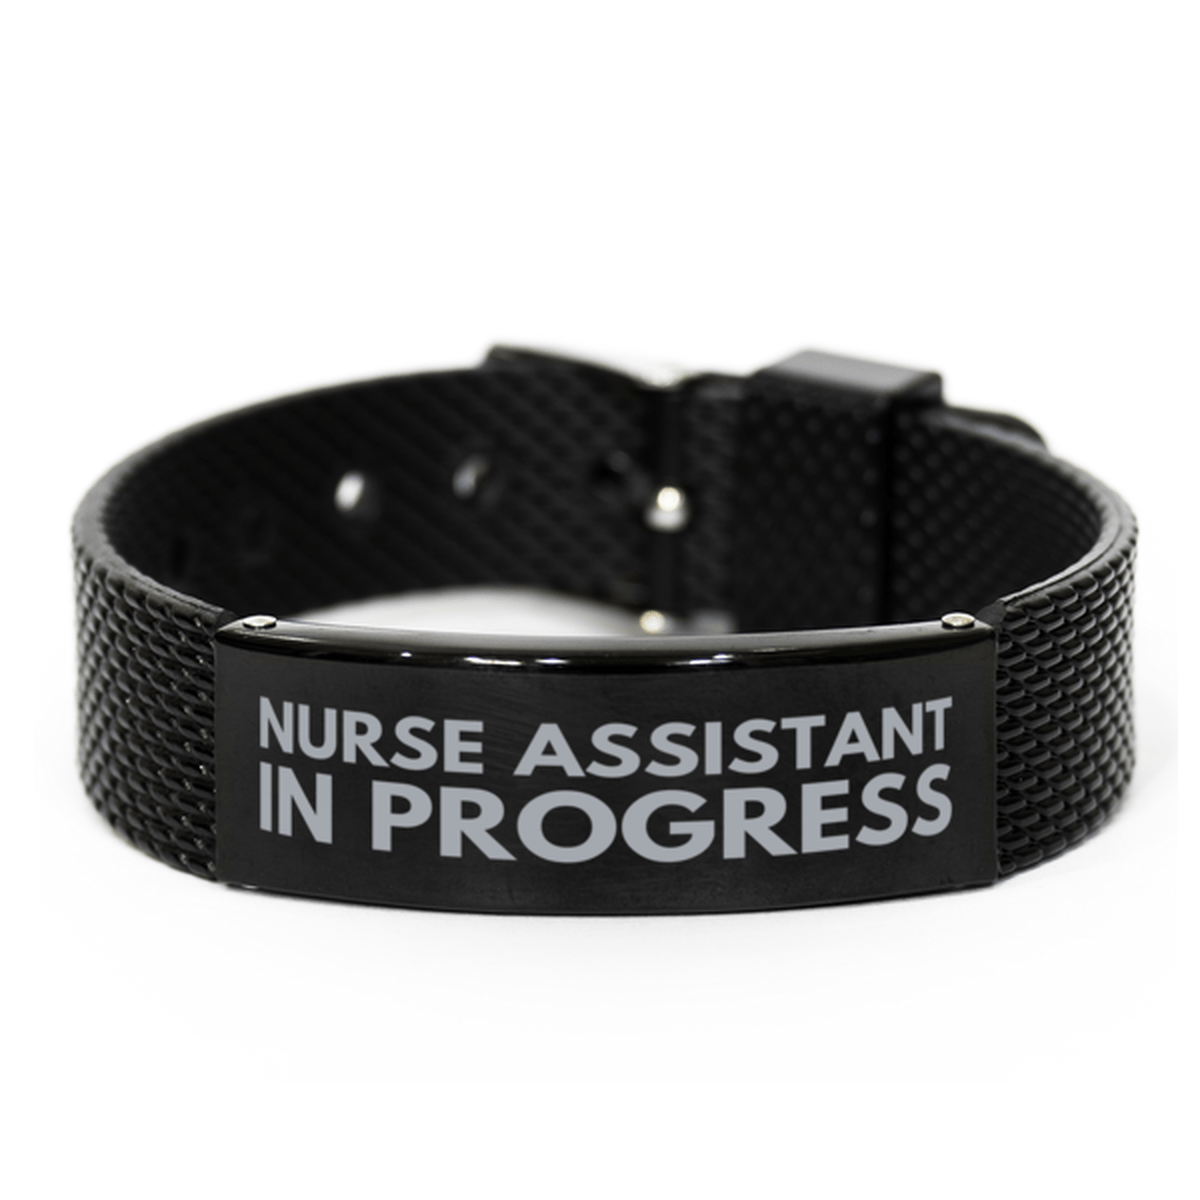 Inspirational Nurse Assistant Black Shark Mesh Bracelet, Nurse Assistant In Progress, Best Graduation Gifts for Students